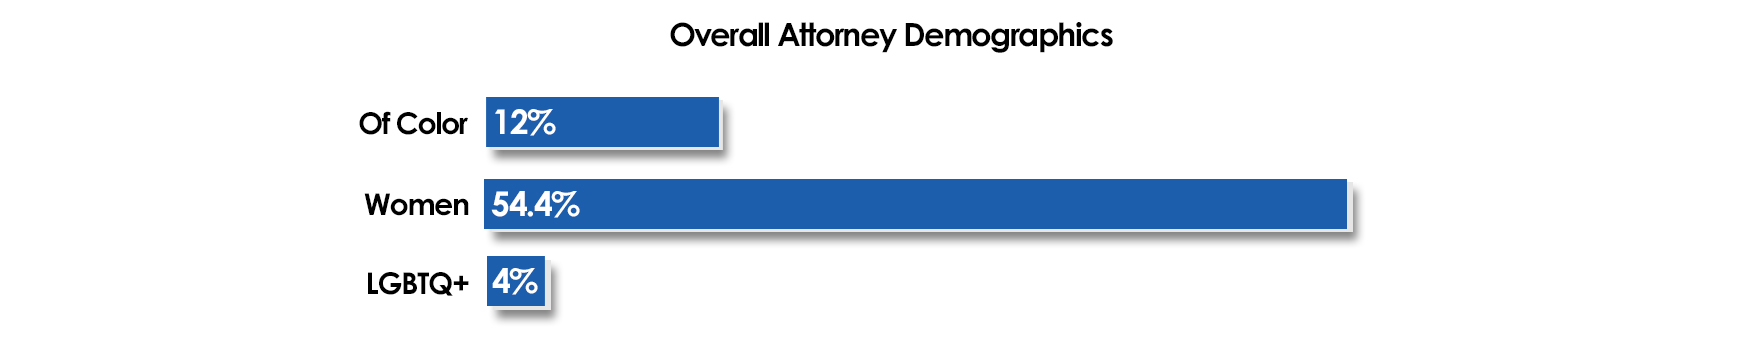 Diversity visualization attorney data